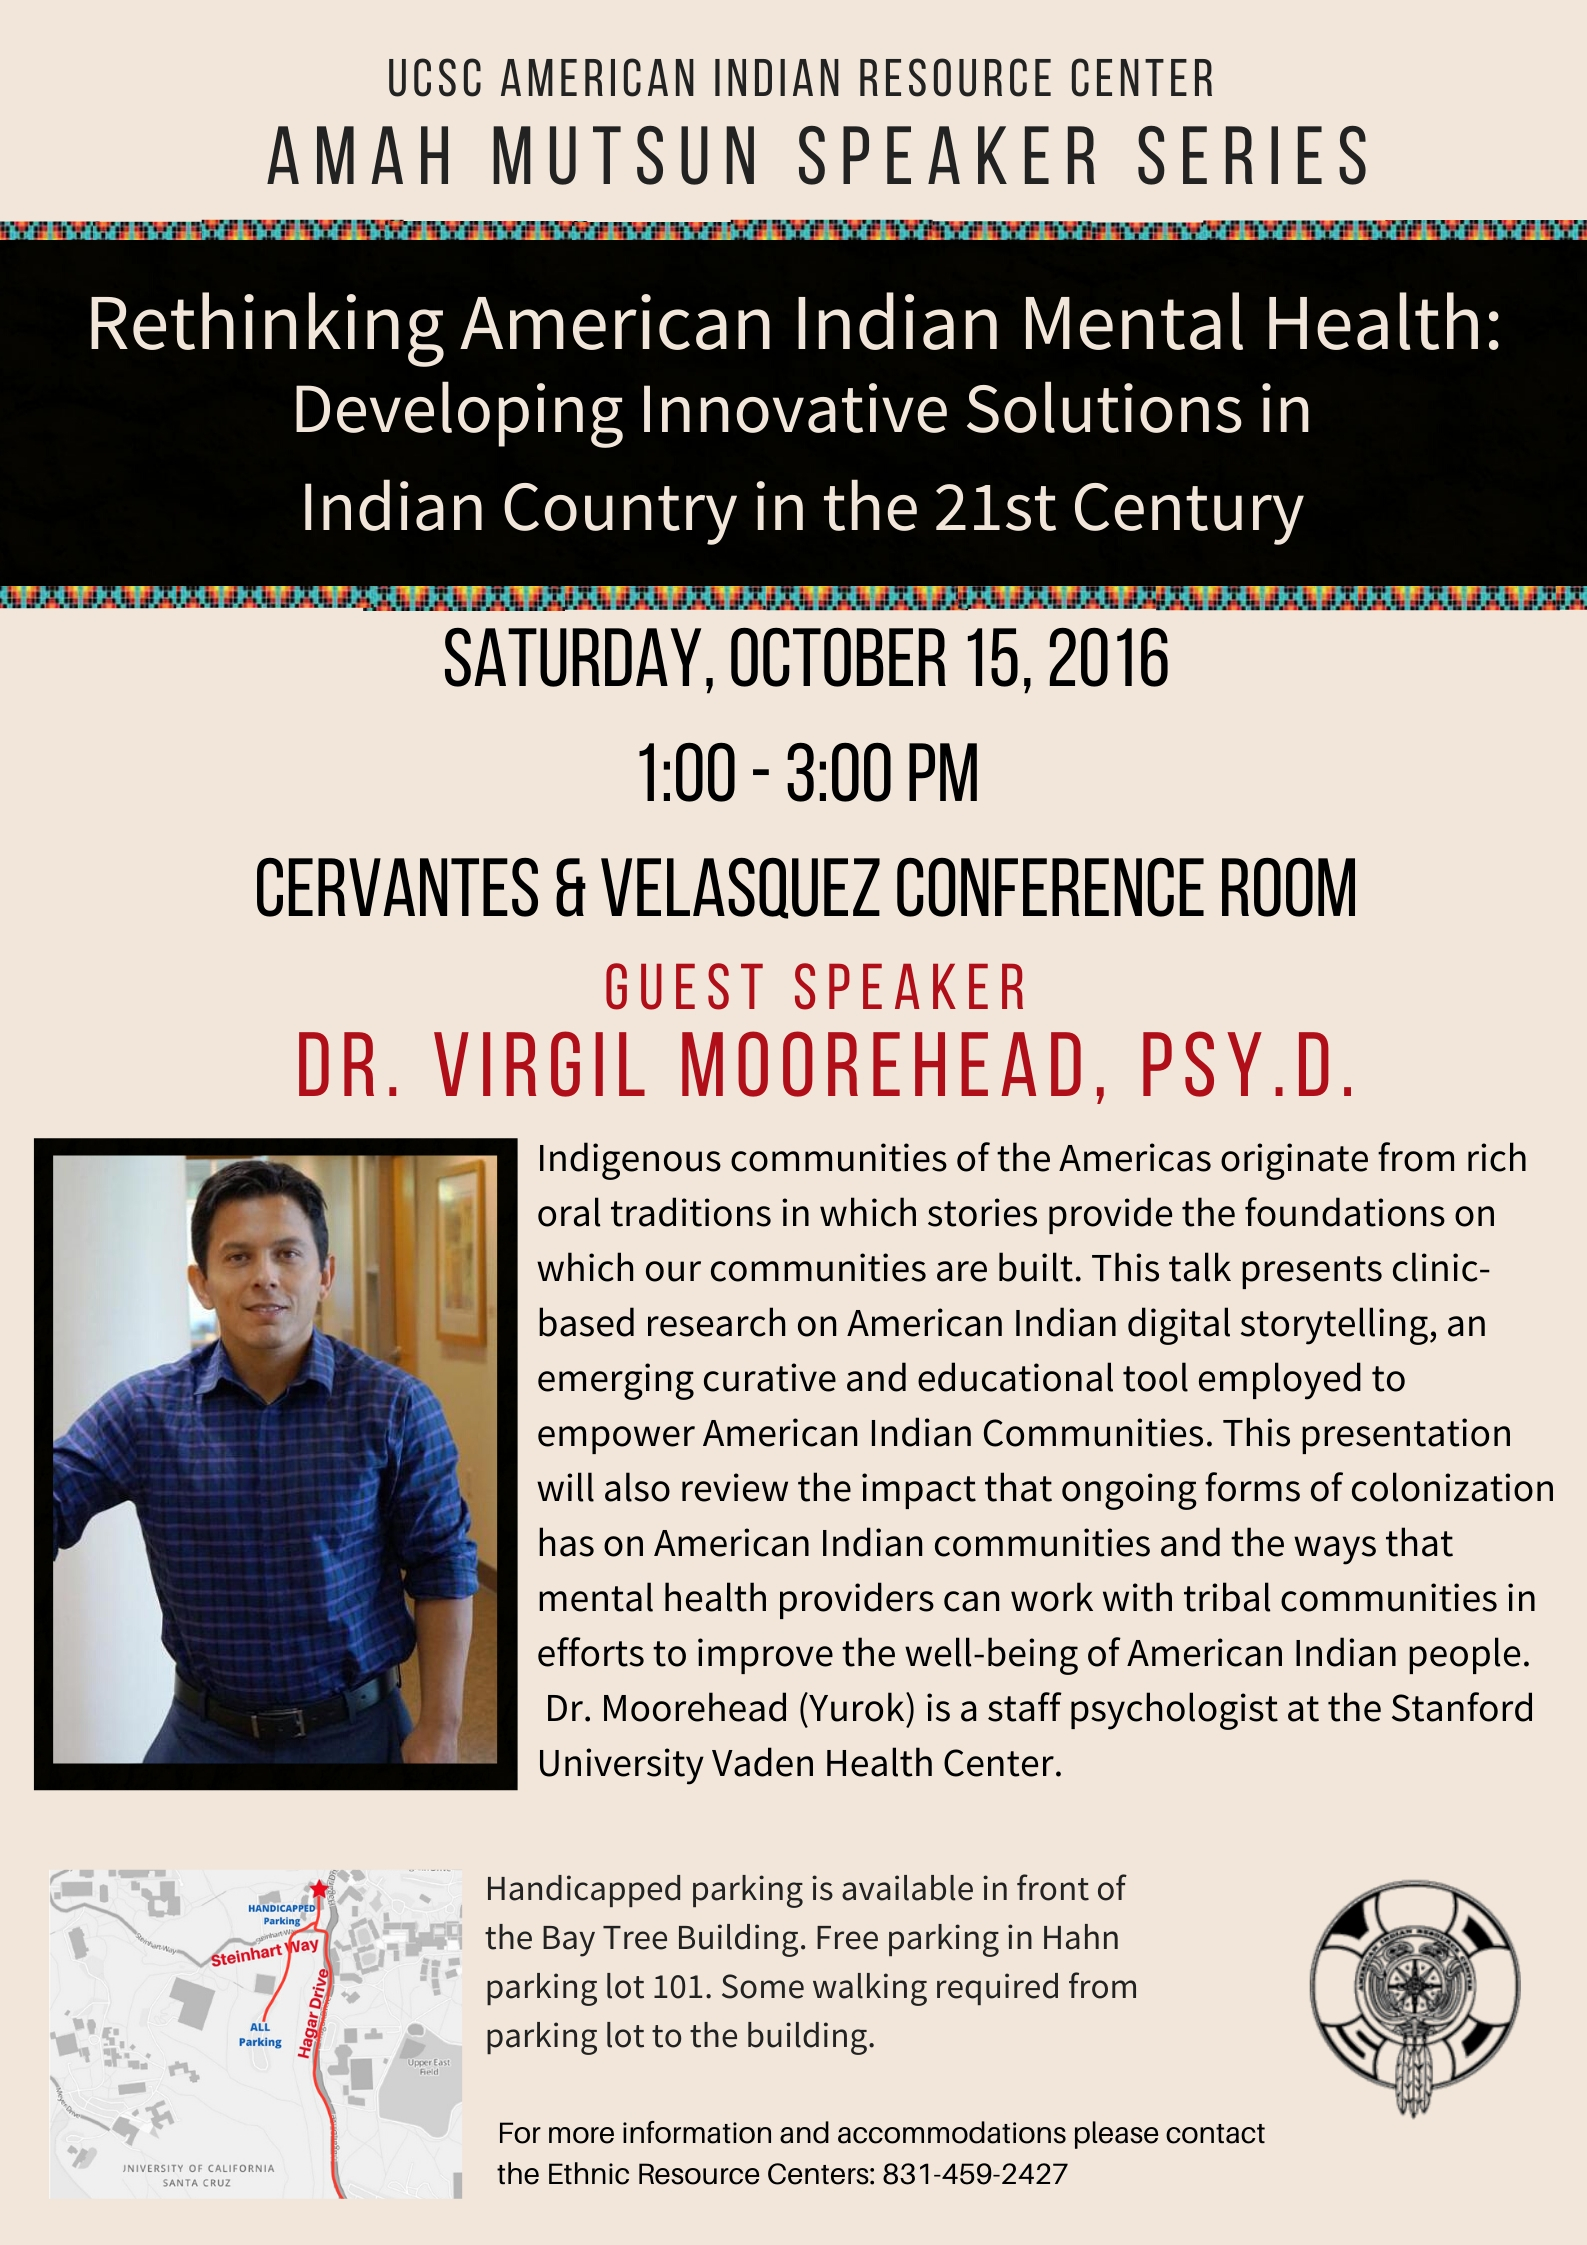 Amah Mutsun Speaker Series: Rethinking American Indian Health with guest speaker Dr. Virgil Moorehead